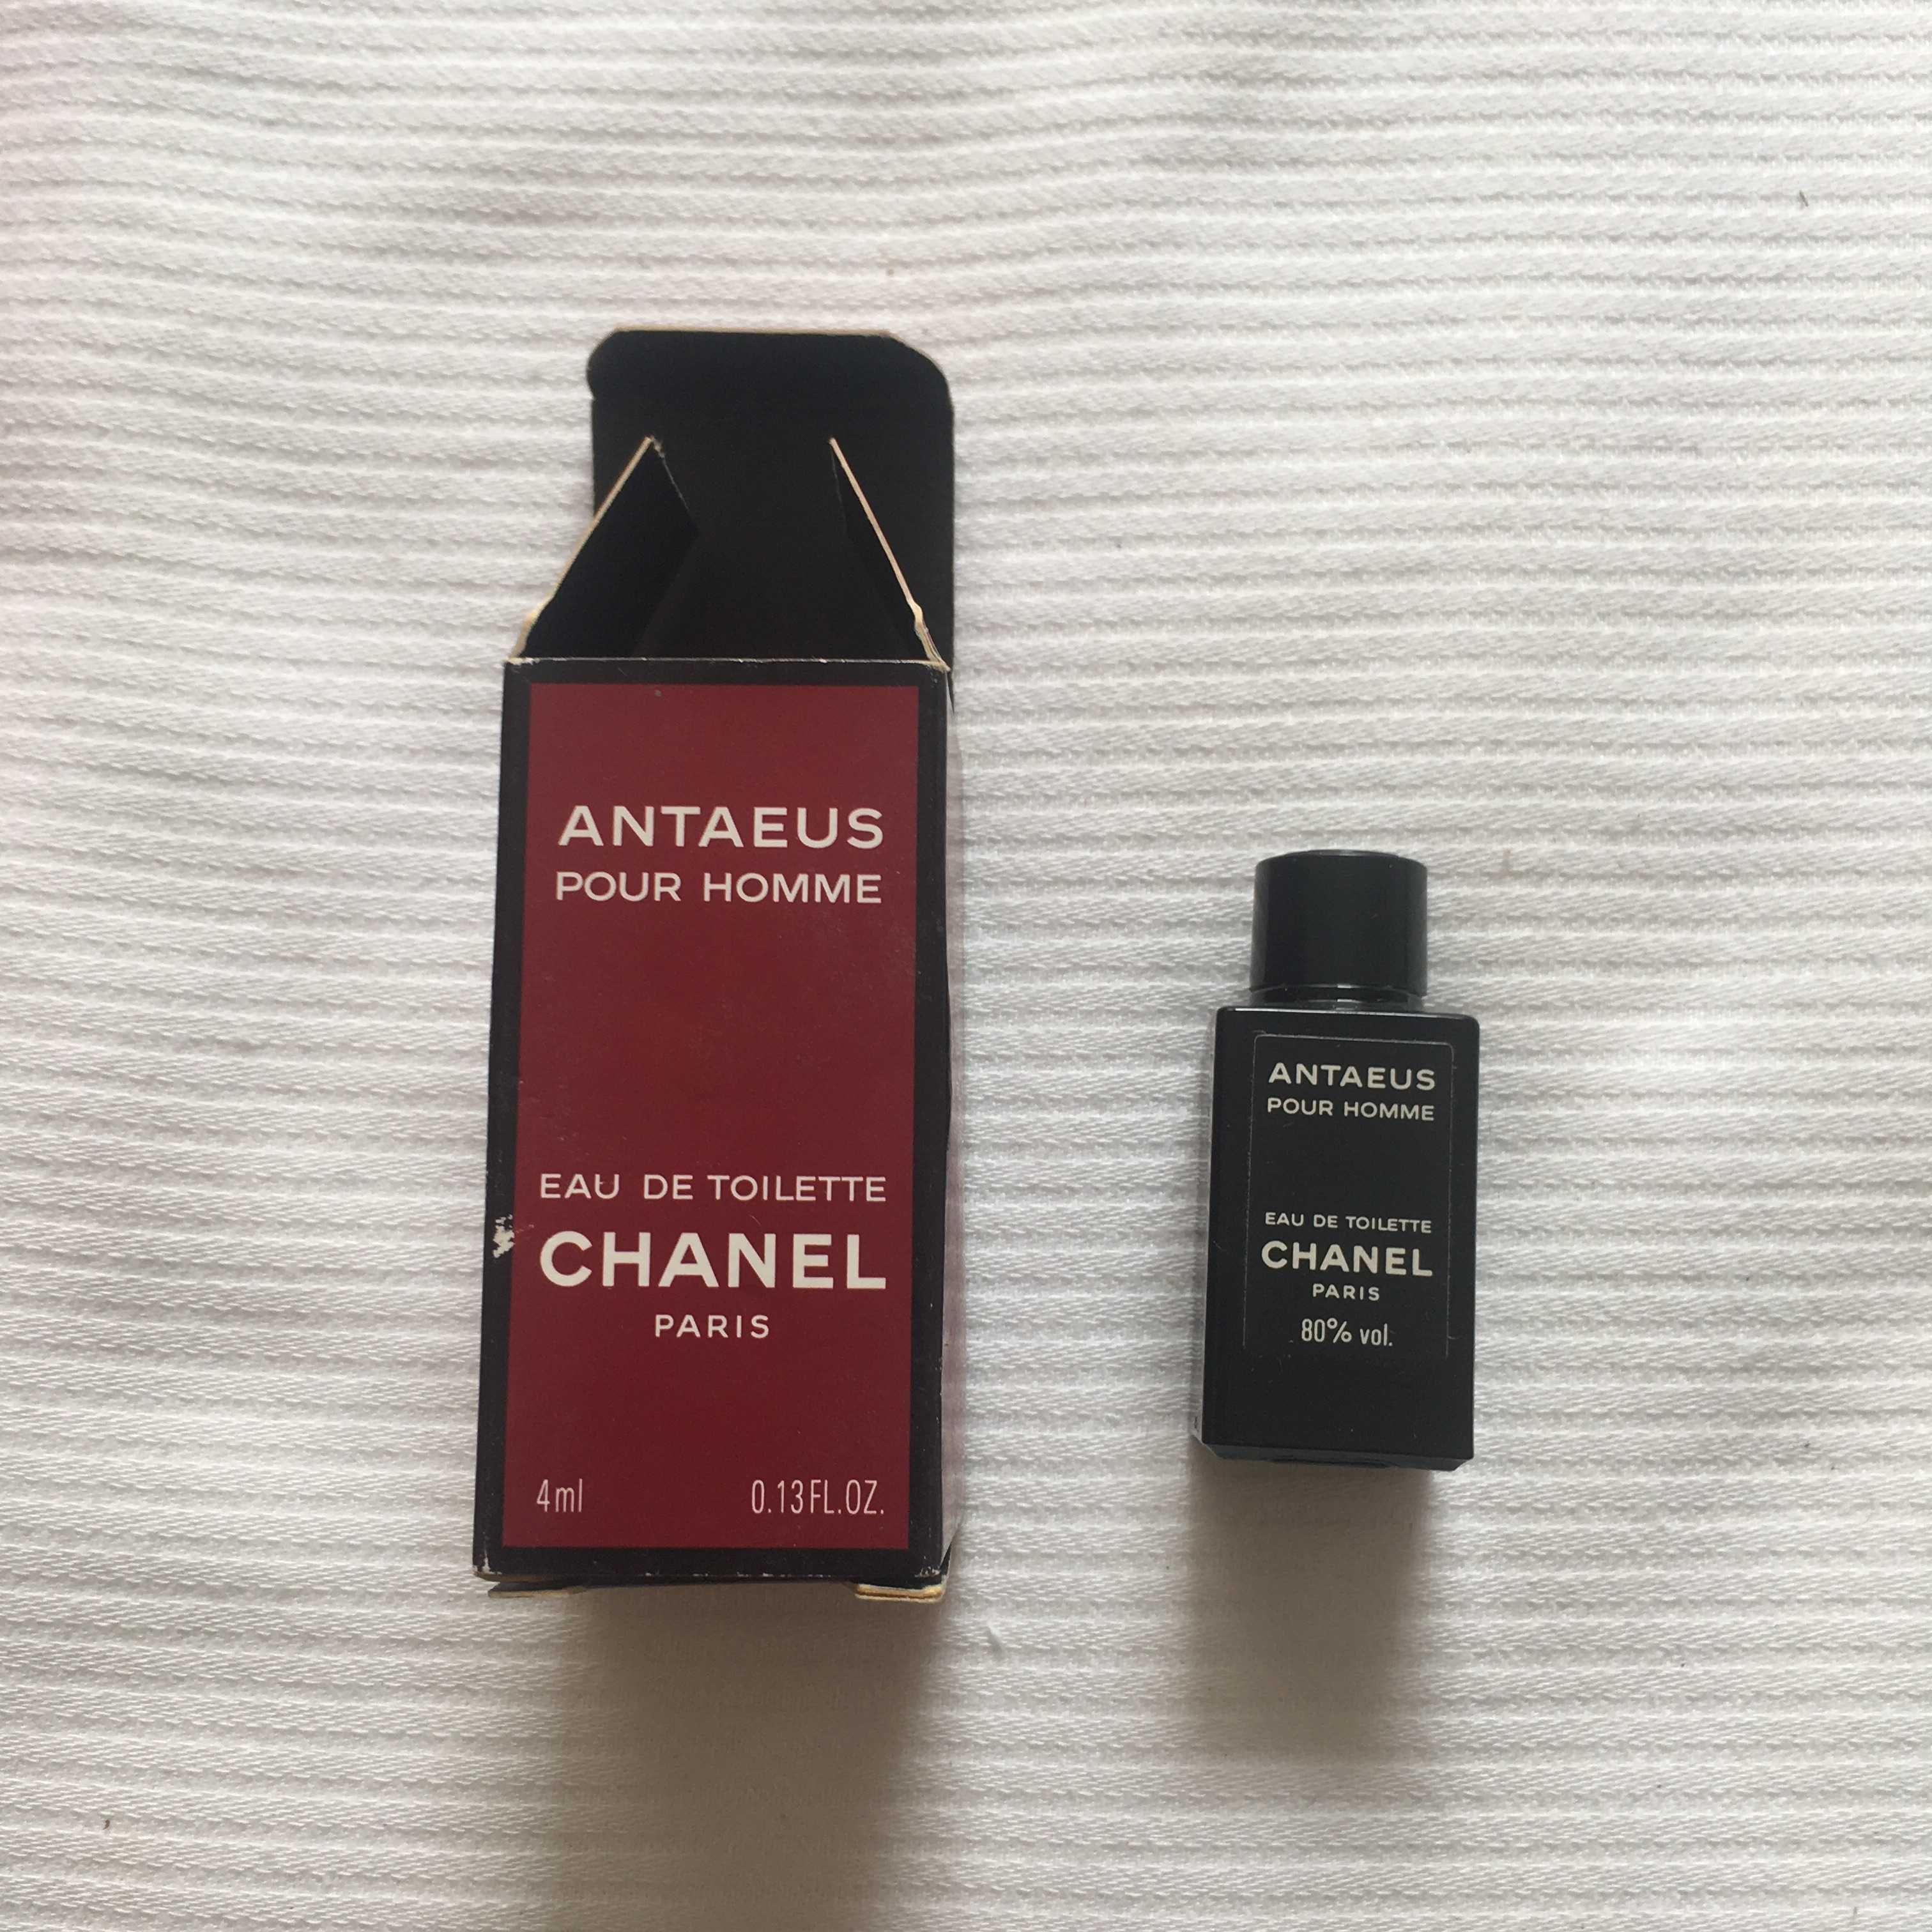 Miniaturas RARAS da Cartier, Chanel e Kenzo